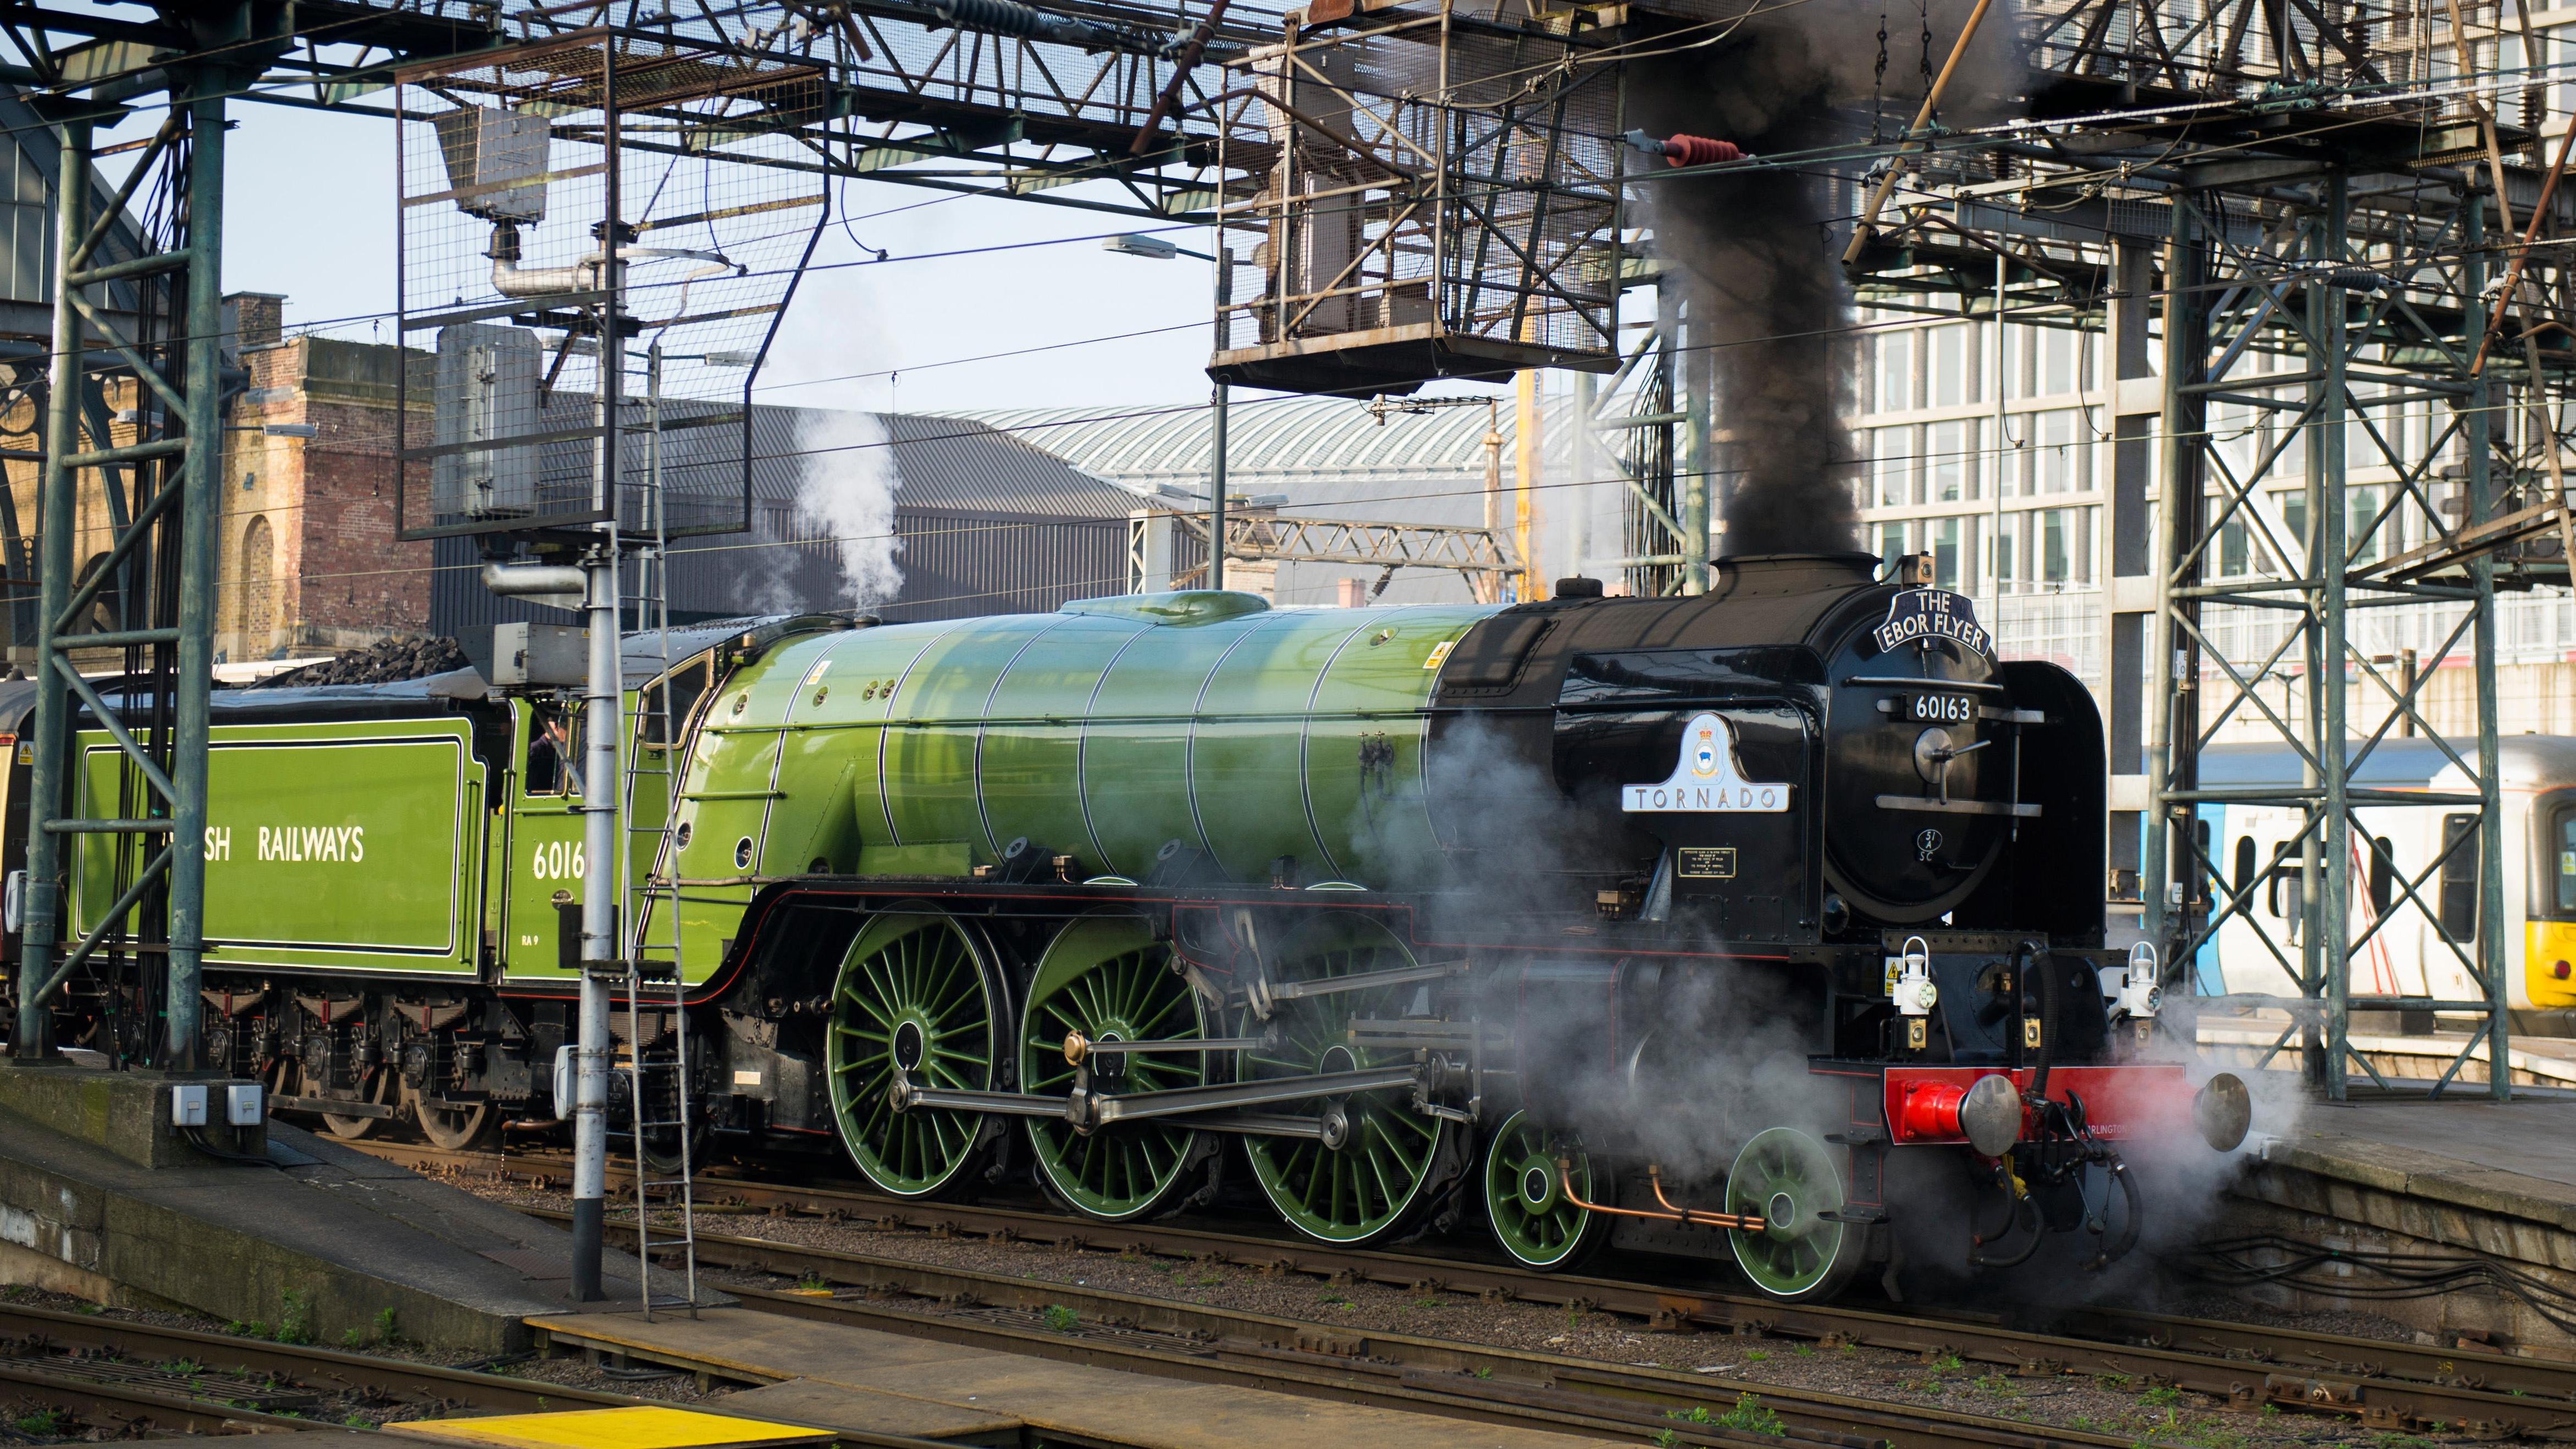 21st-century steam train Tornado breaks down | News | The Times